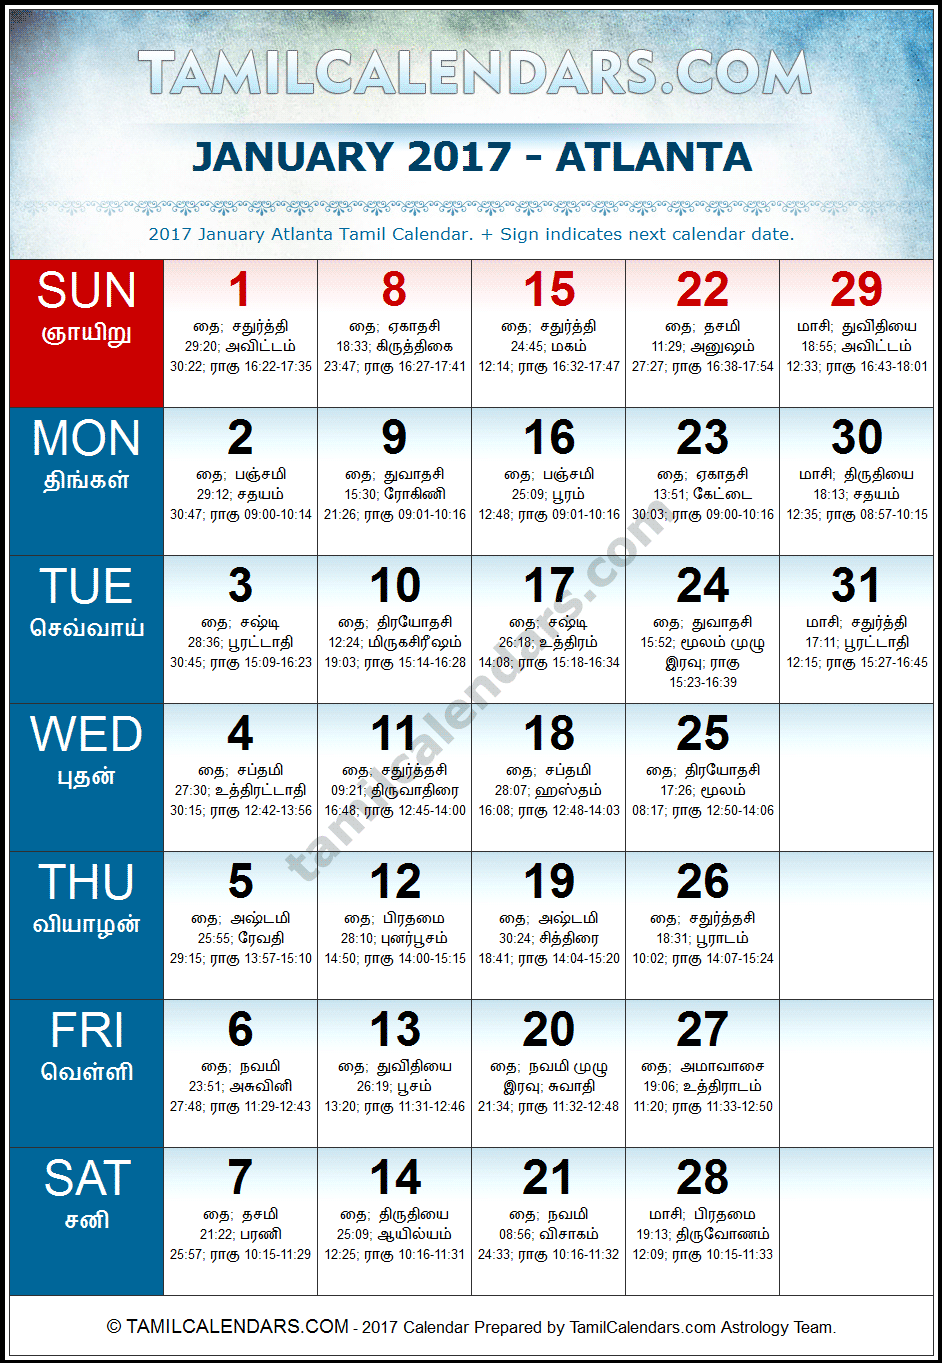 January 2017 Tamil Calendar for Atlanta, USA